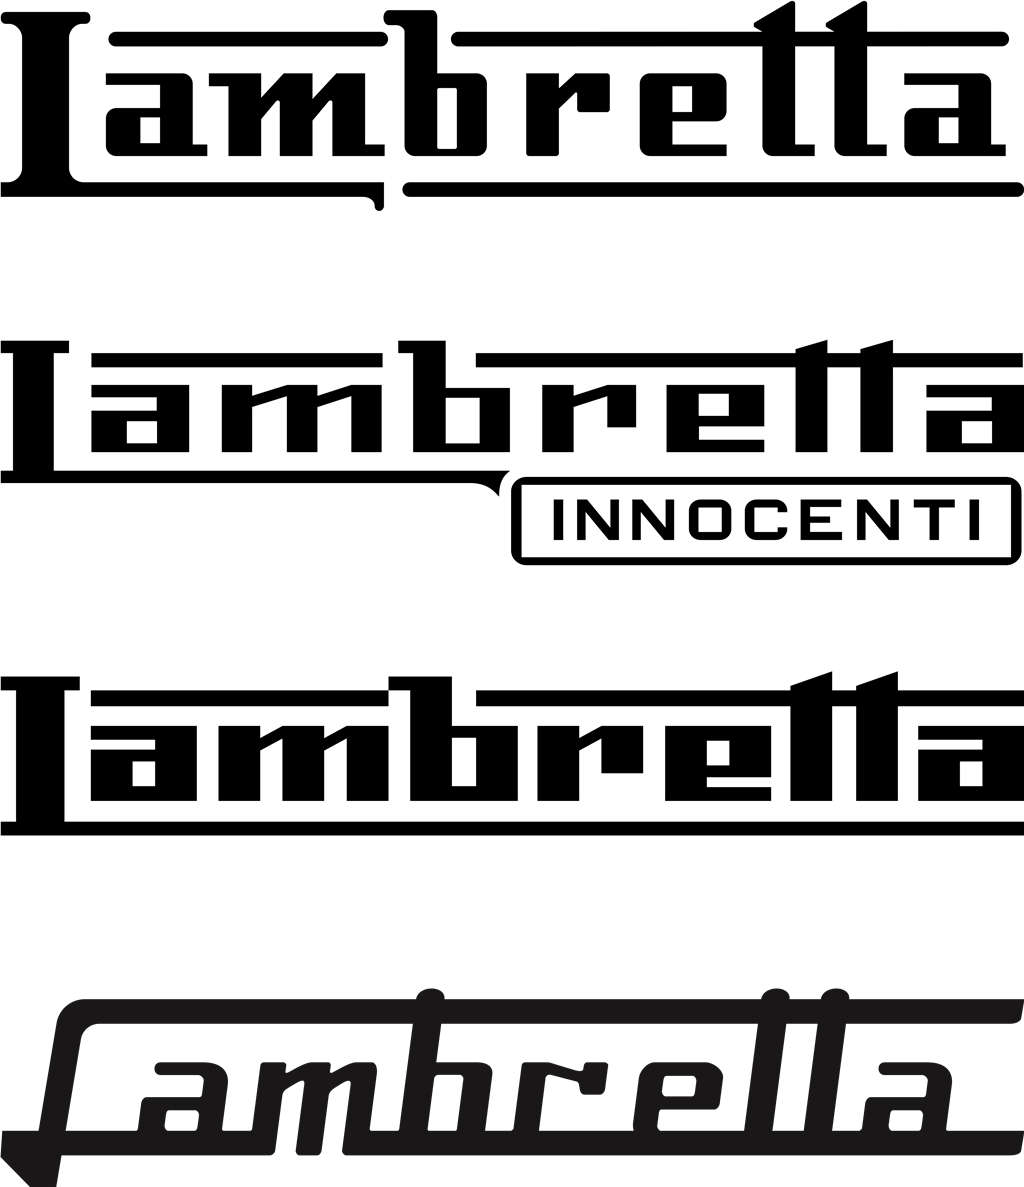 Lambretta logotype, transparent .png, medium, large